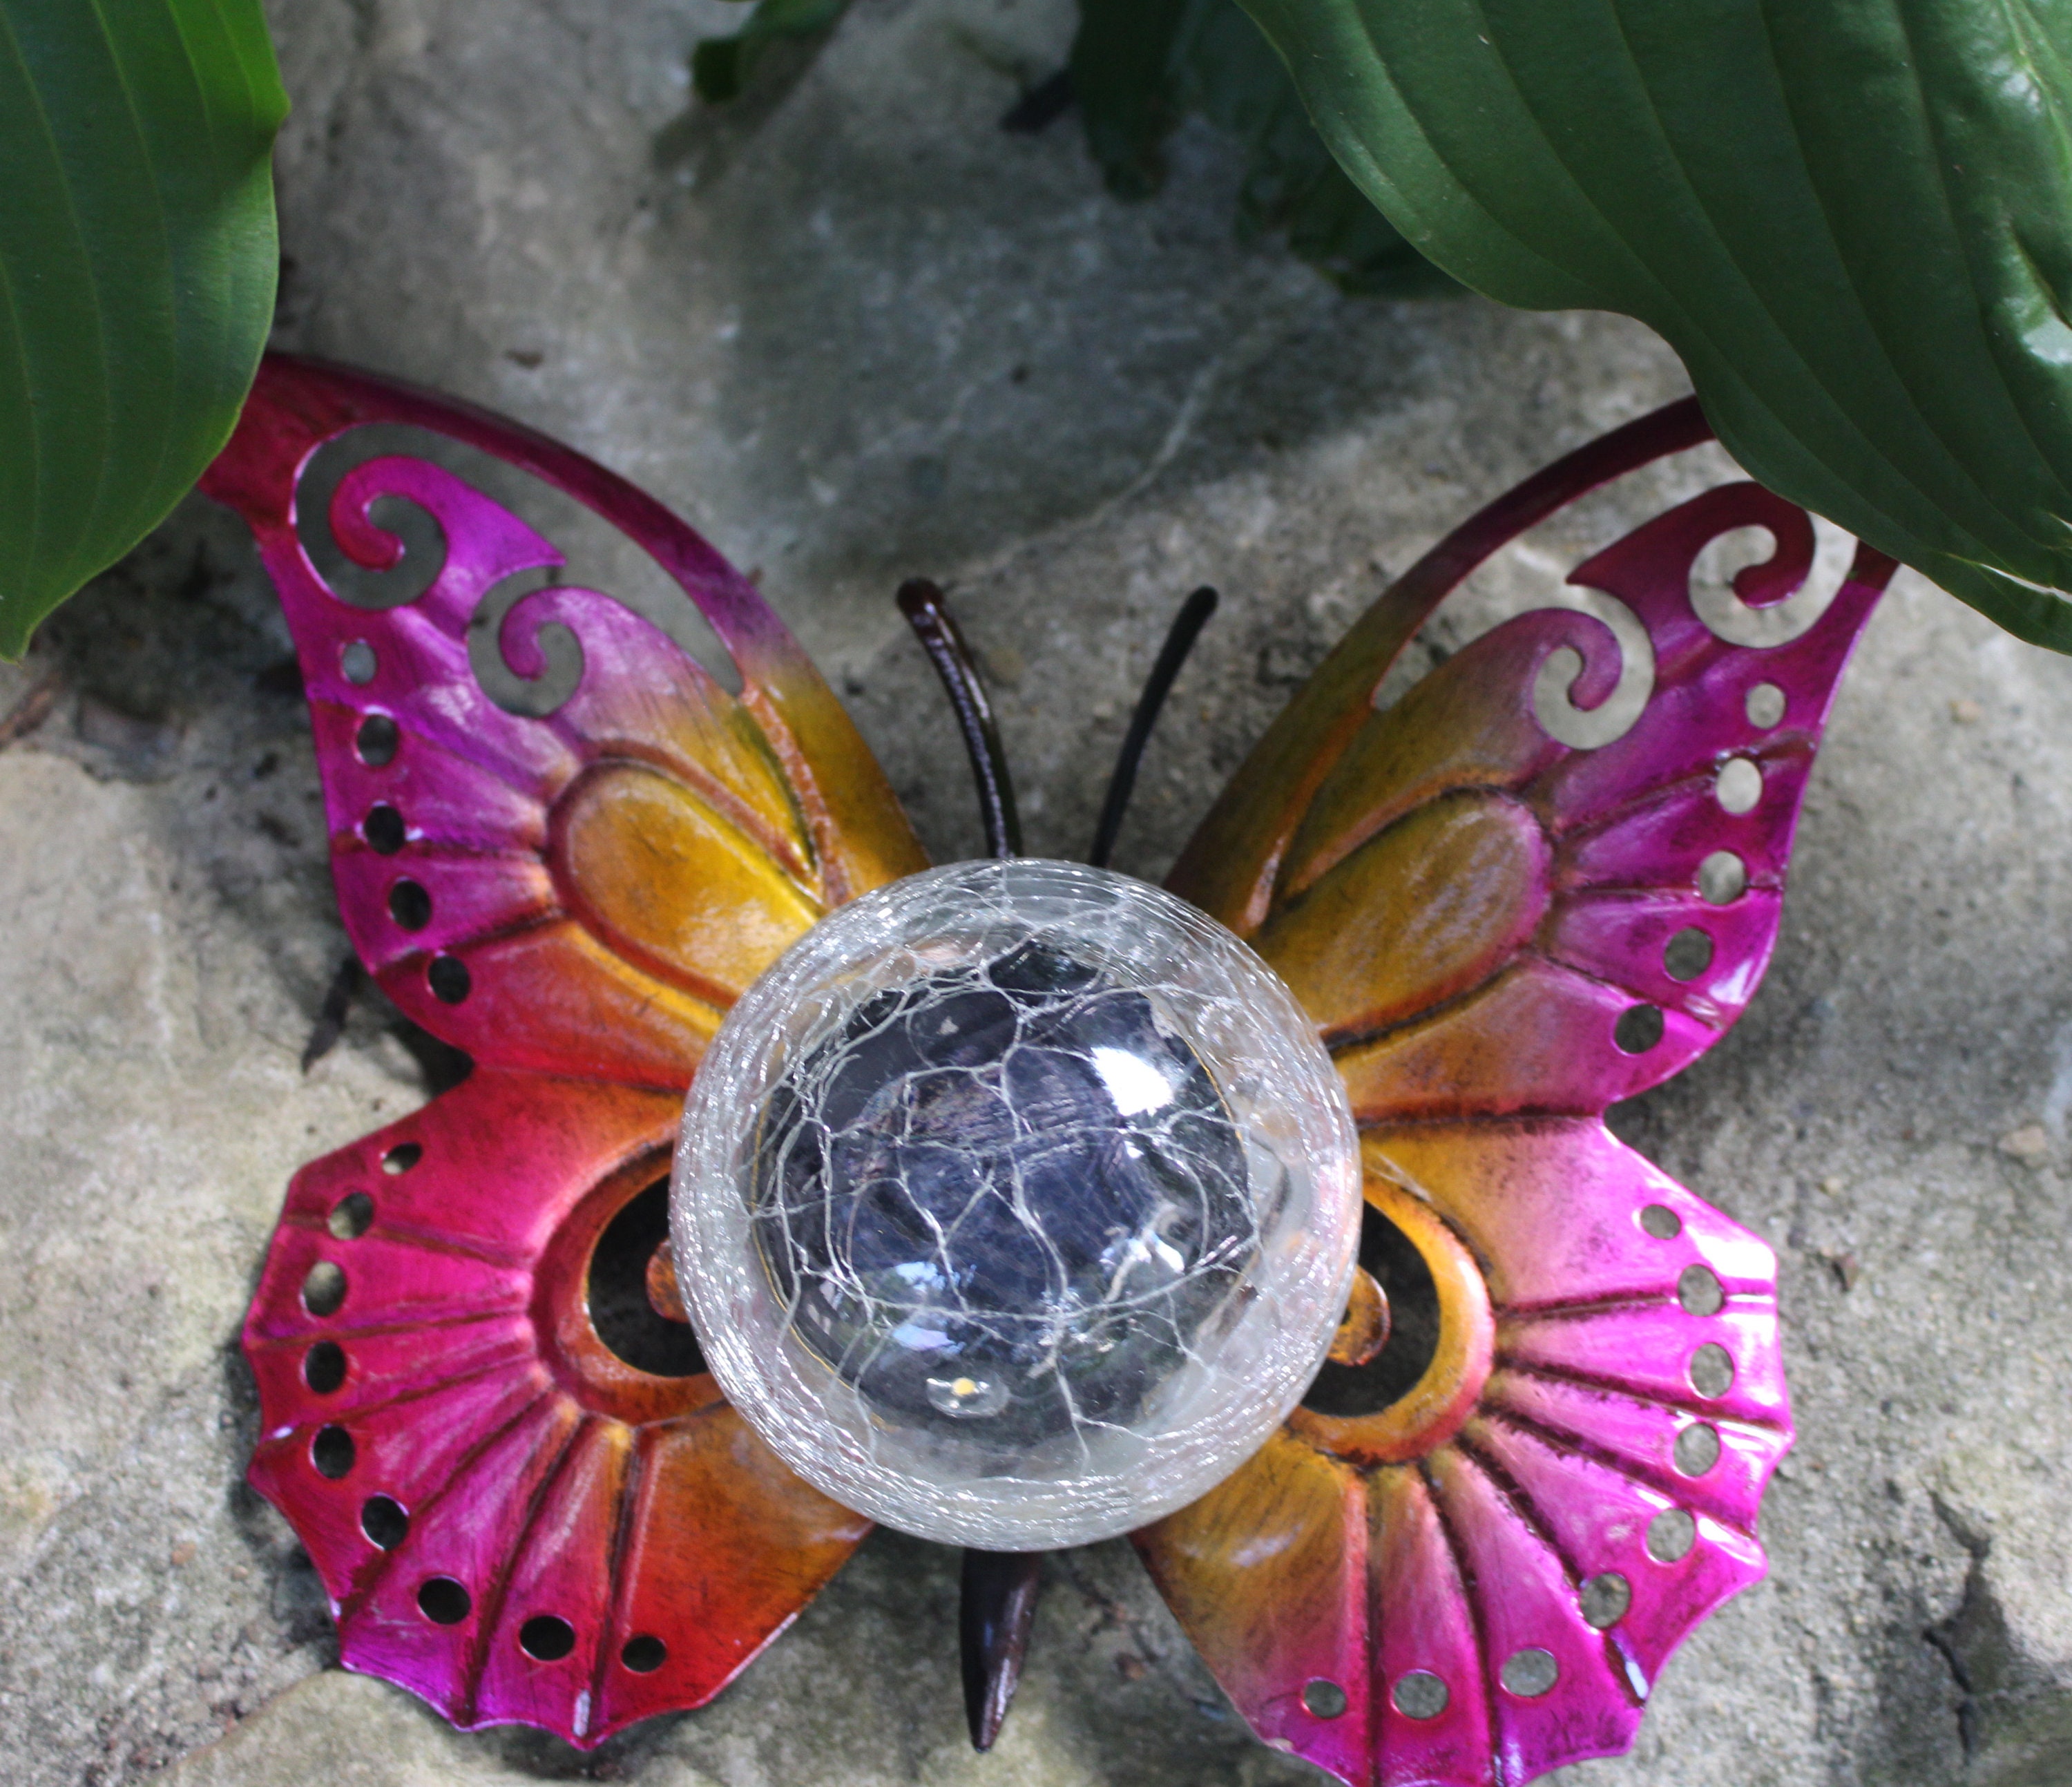 LA TALUS Solar Powered Flying Fluttering Fake Butterfly Yard Garden Stake  Ornament Decor Random Color One Size 